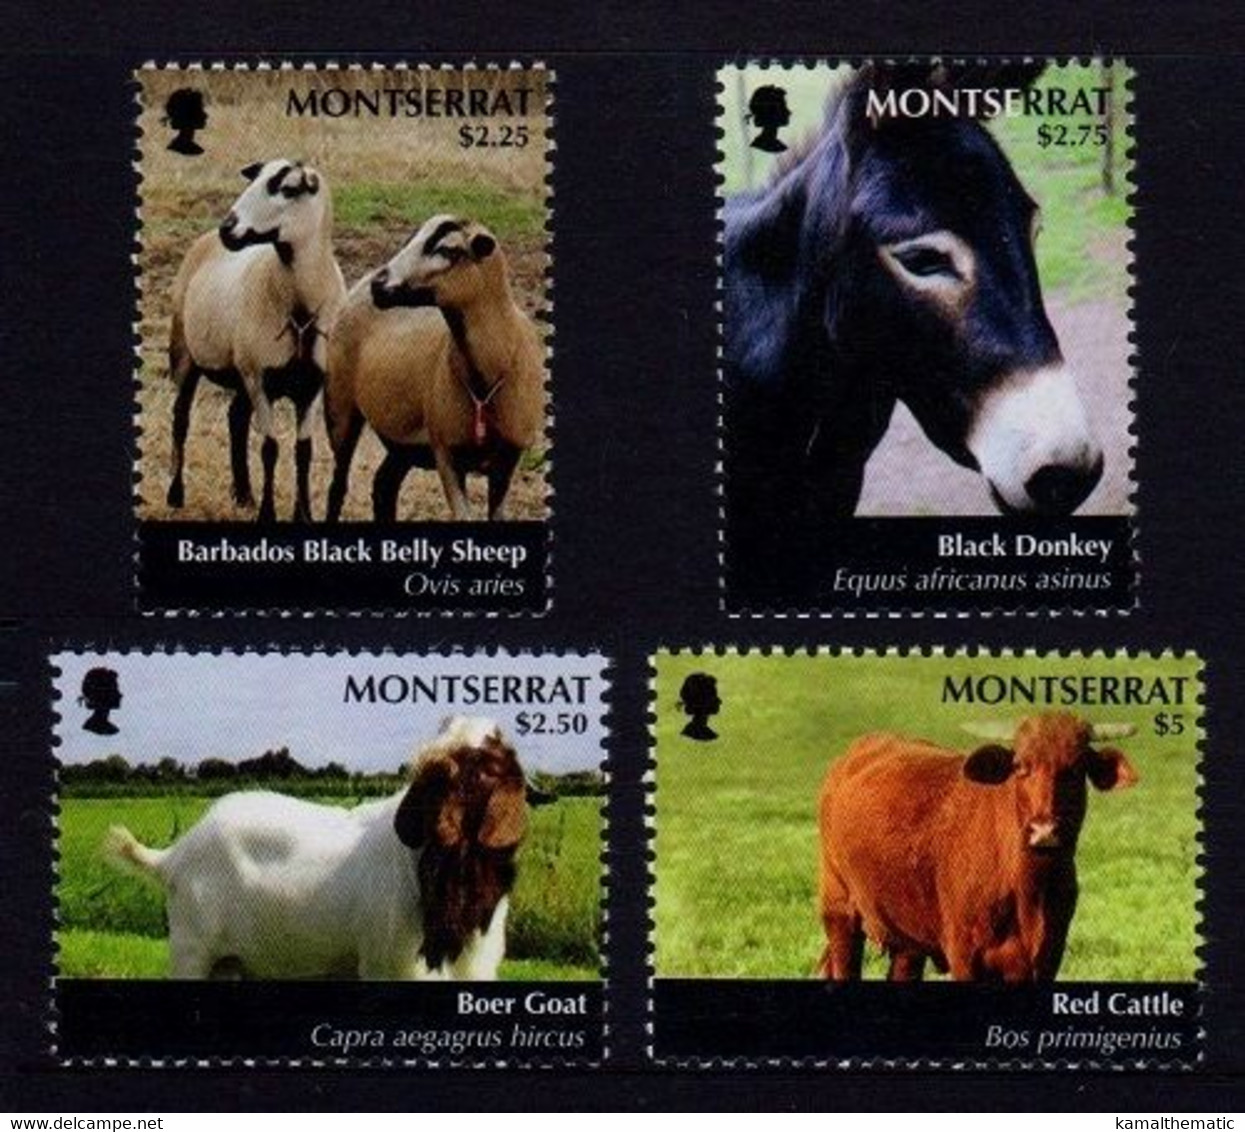 Black Donkey, Barbado Black Belly Sheep, Boer Goat, Montserrat 2011 MNH 4v - Anes